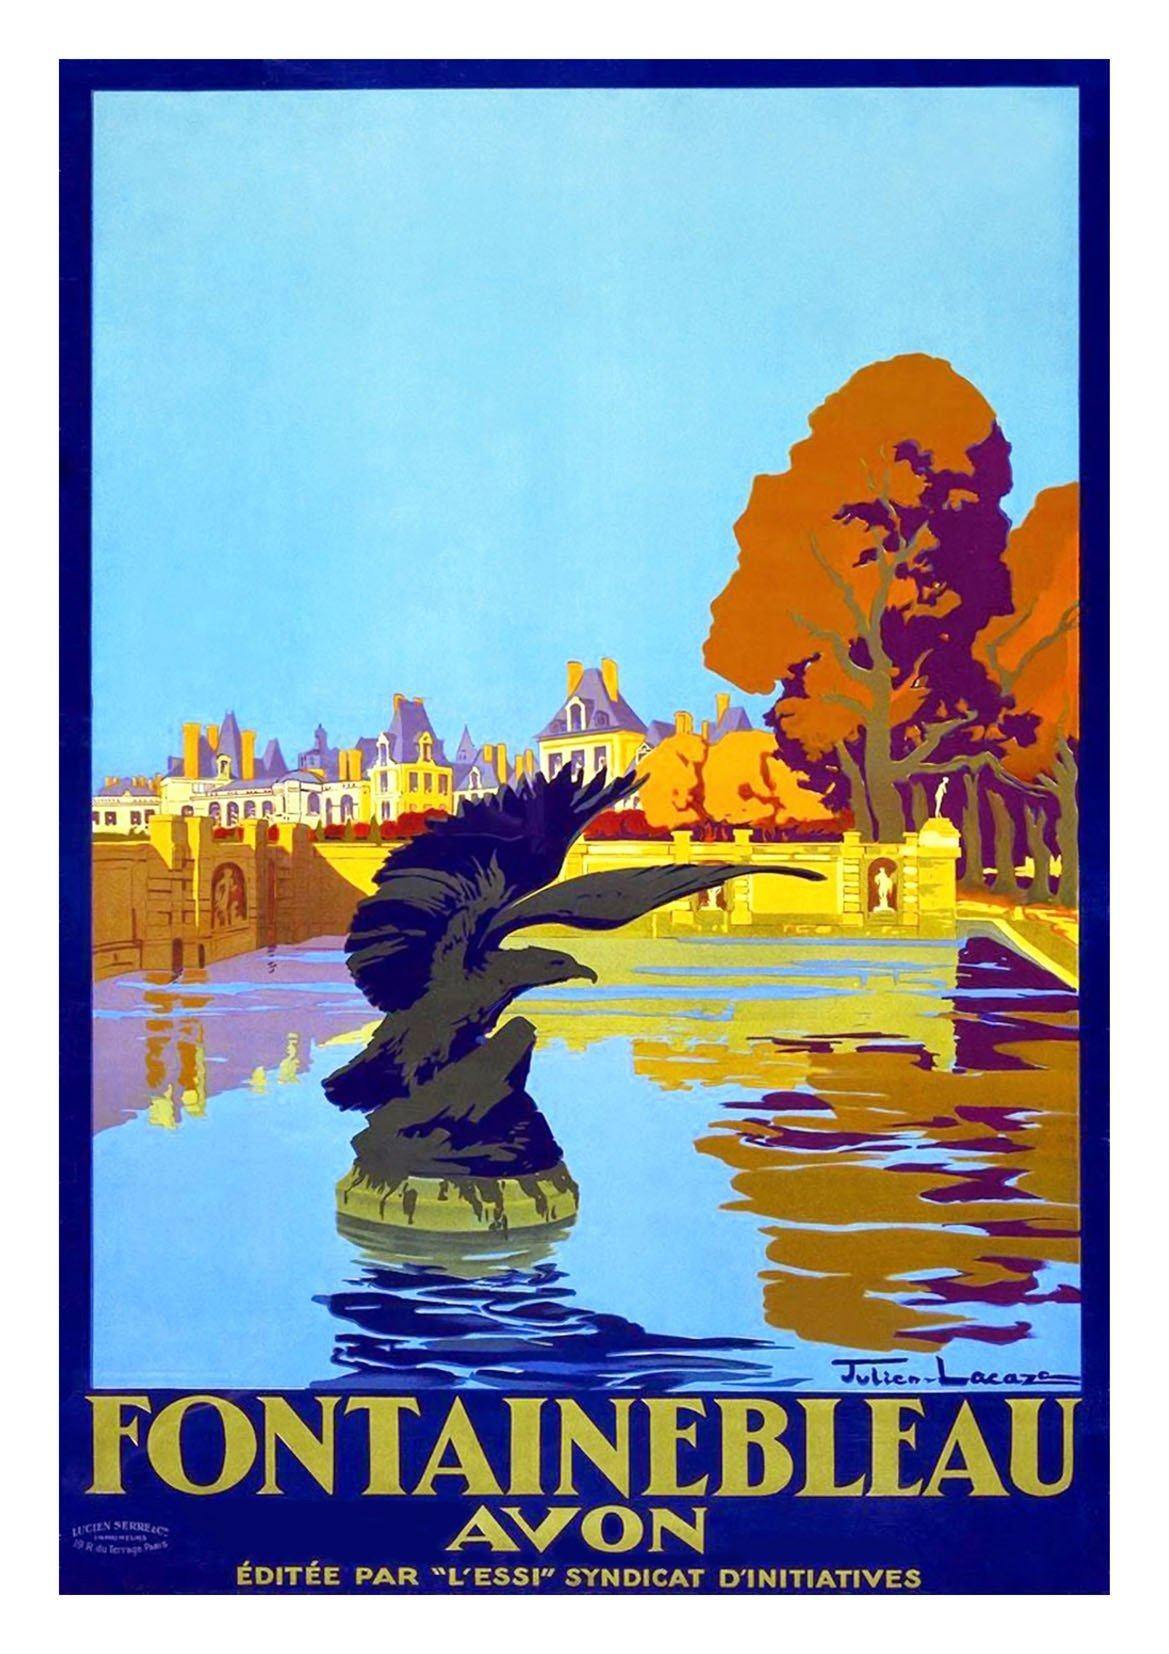 FONTAINEBLEAU FRANCE POSTER: Vintage Travel Advert Art Print - Pimlico Prints